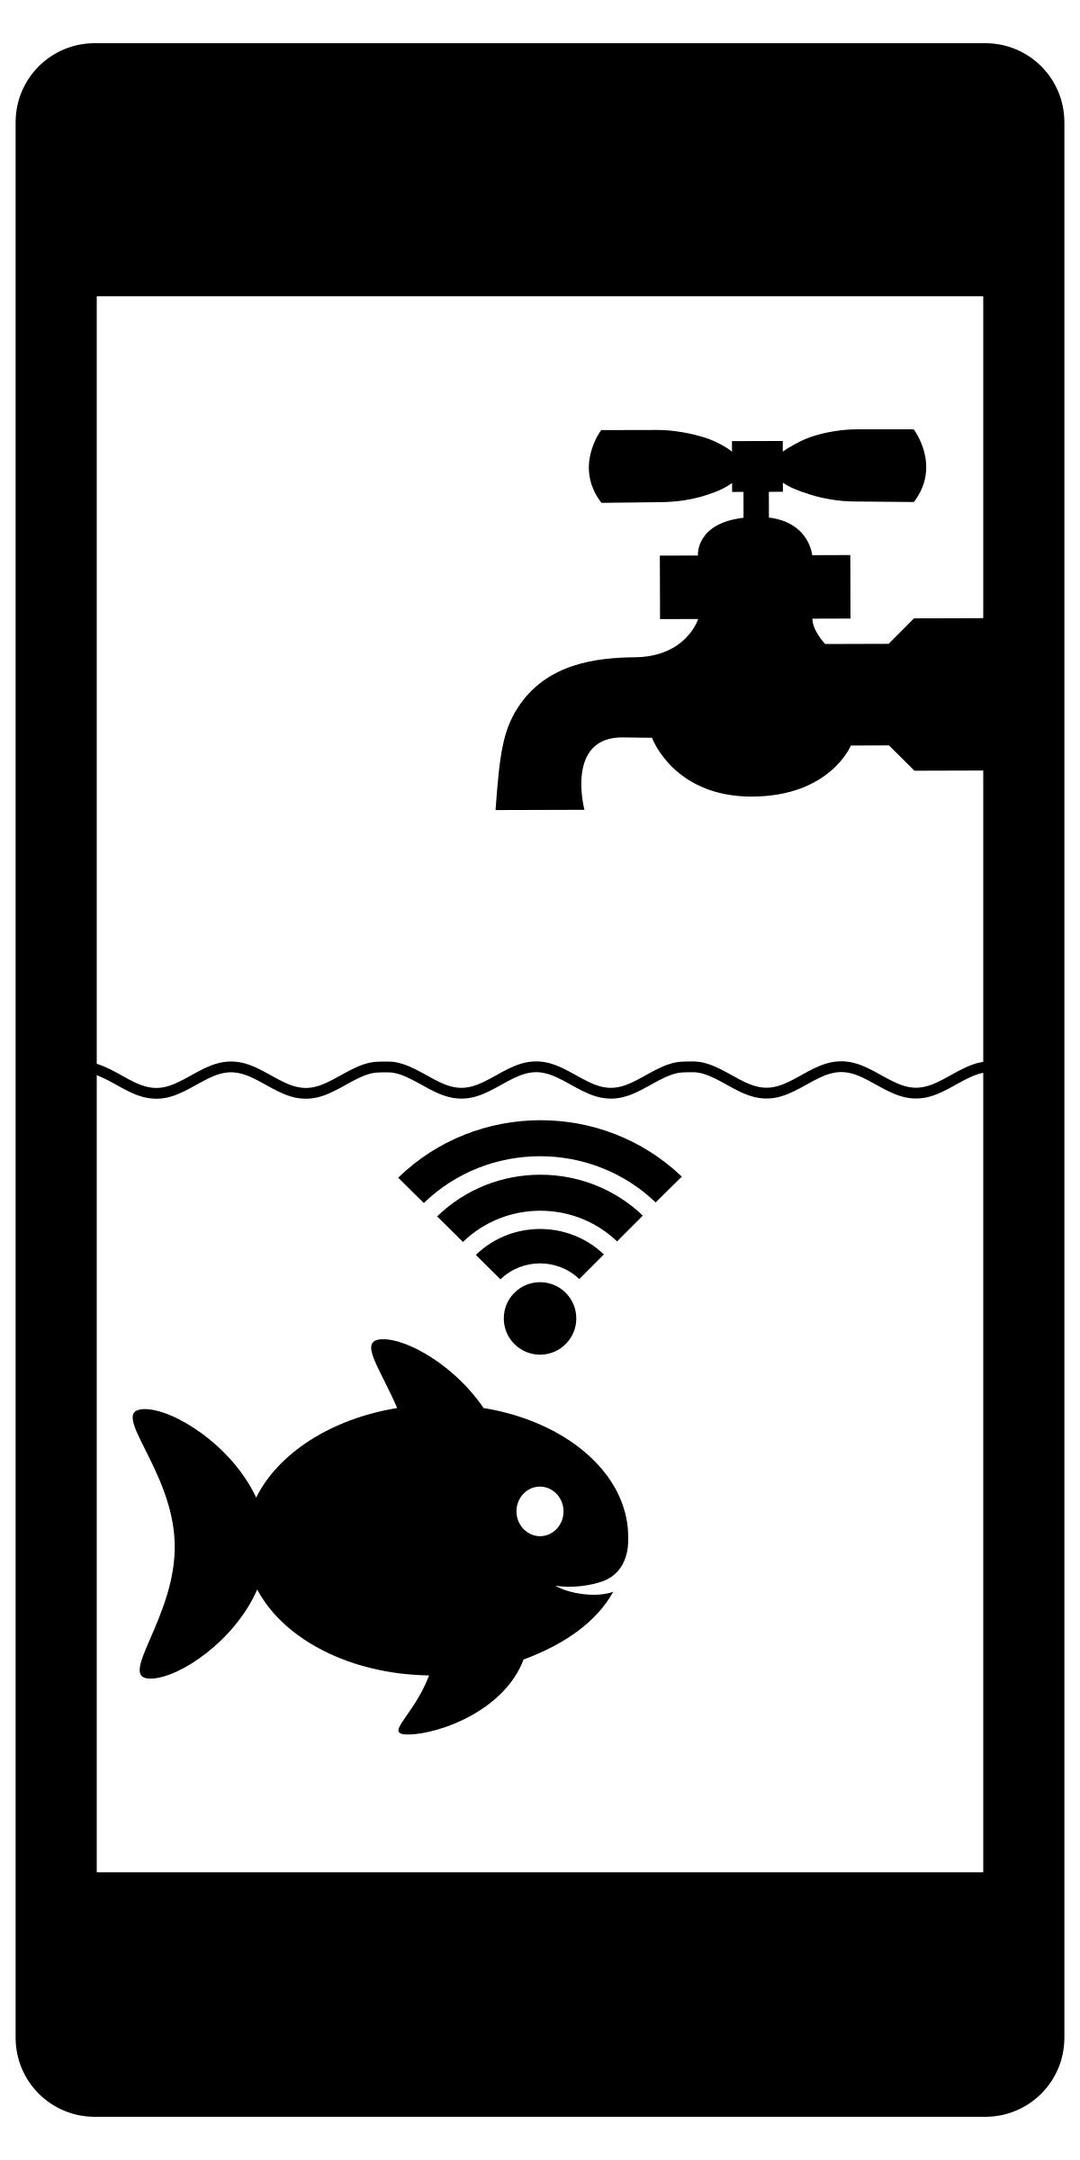 Fossasia 2016 - internet of sinks png transparent